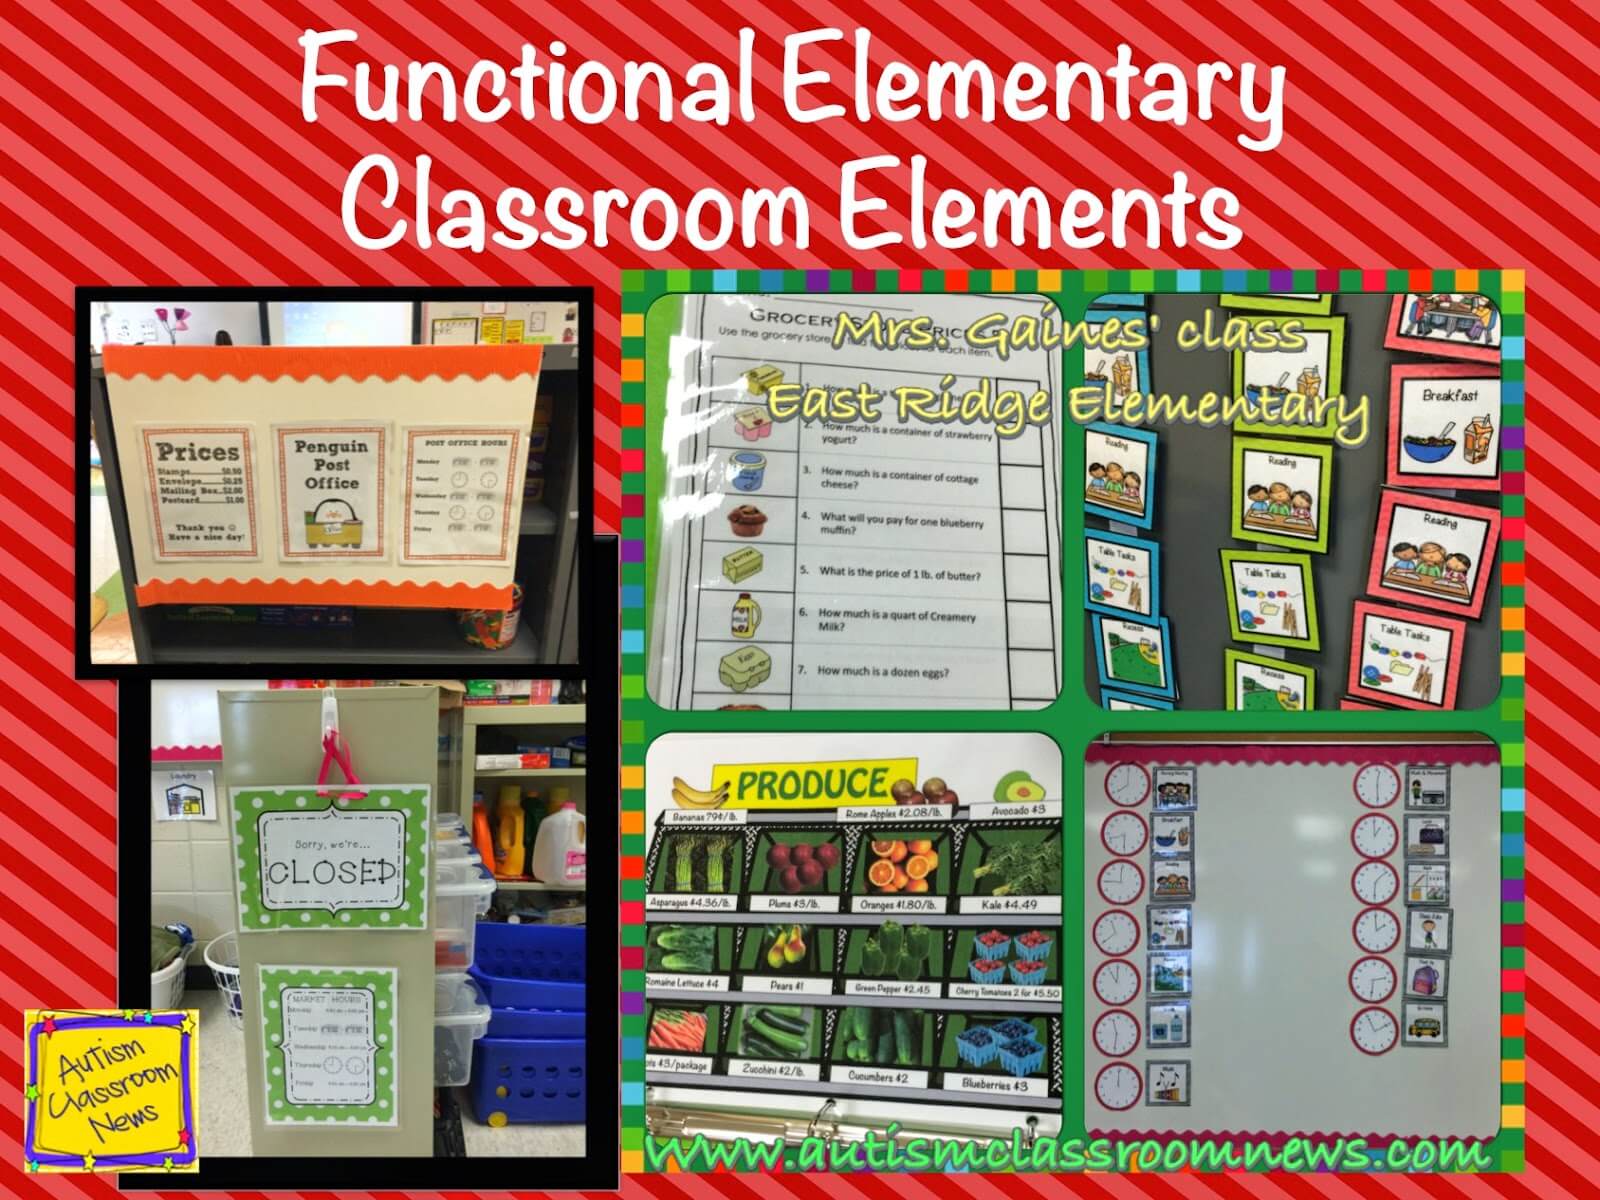 Elementary functions. Учебный класс в организации. Different Classroom Layouts. Function life